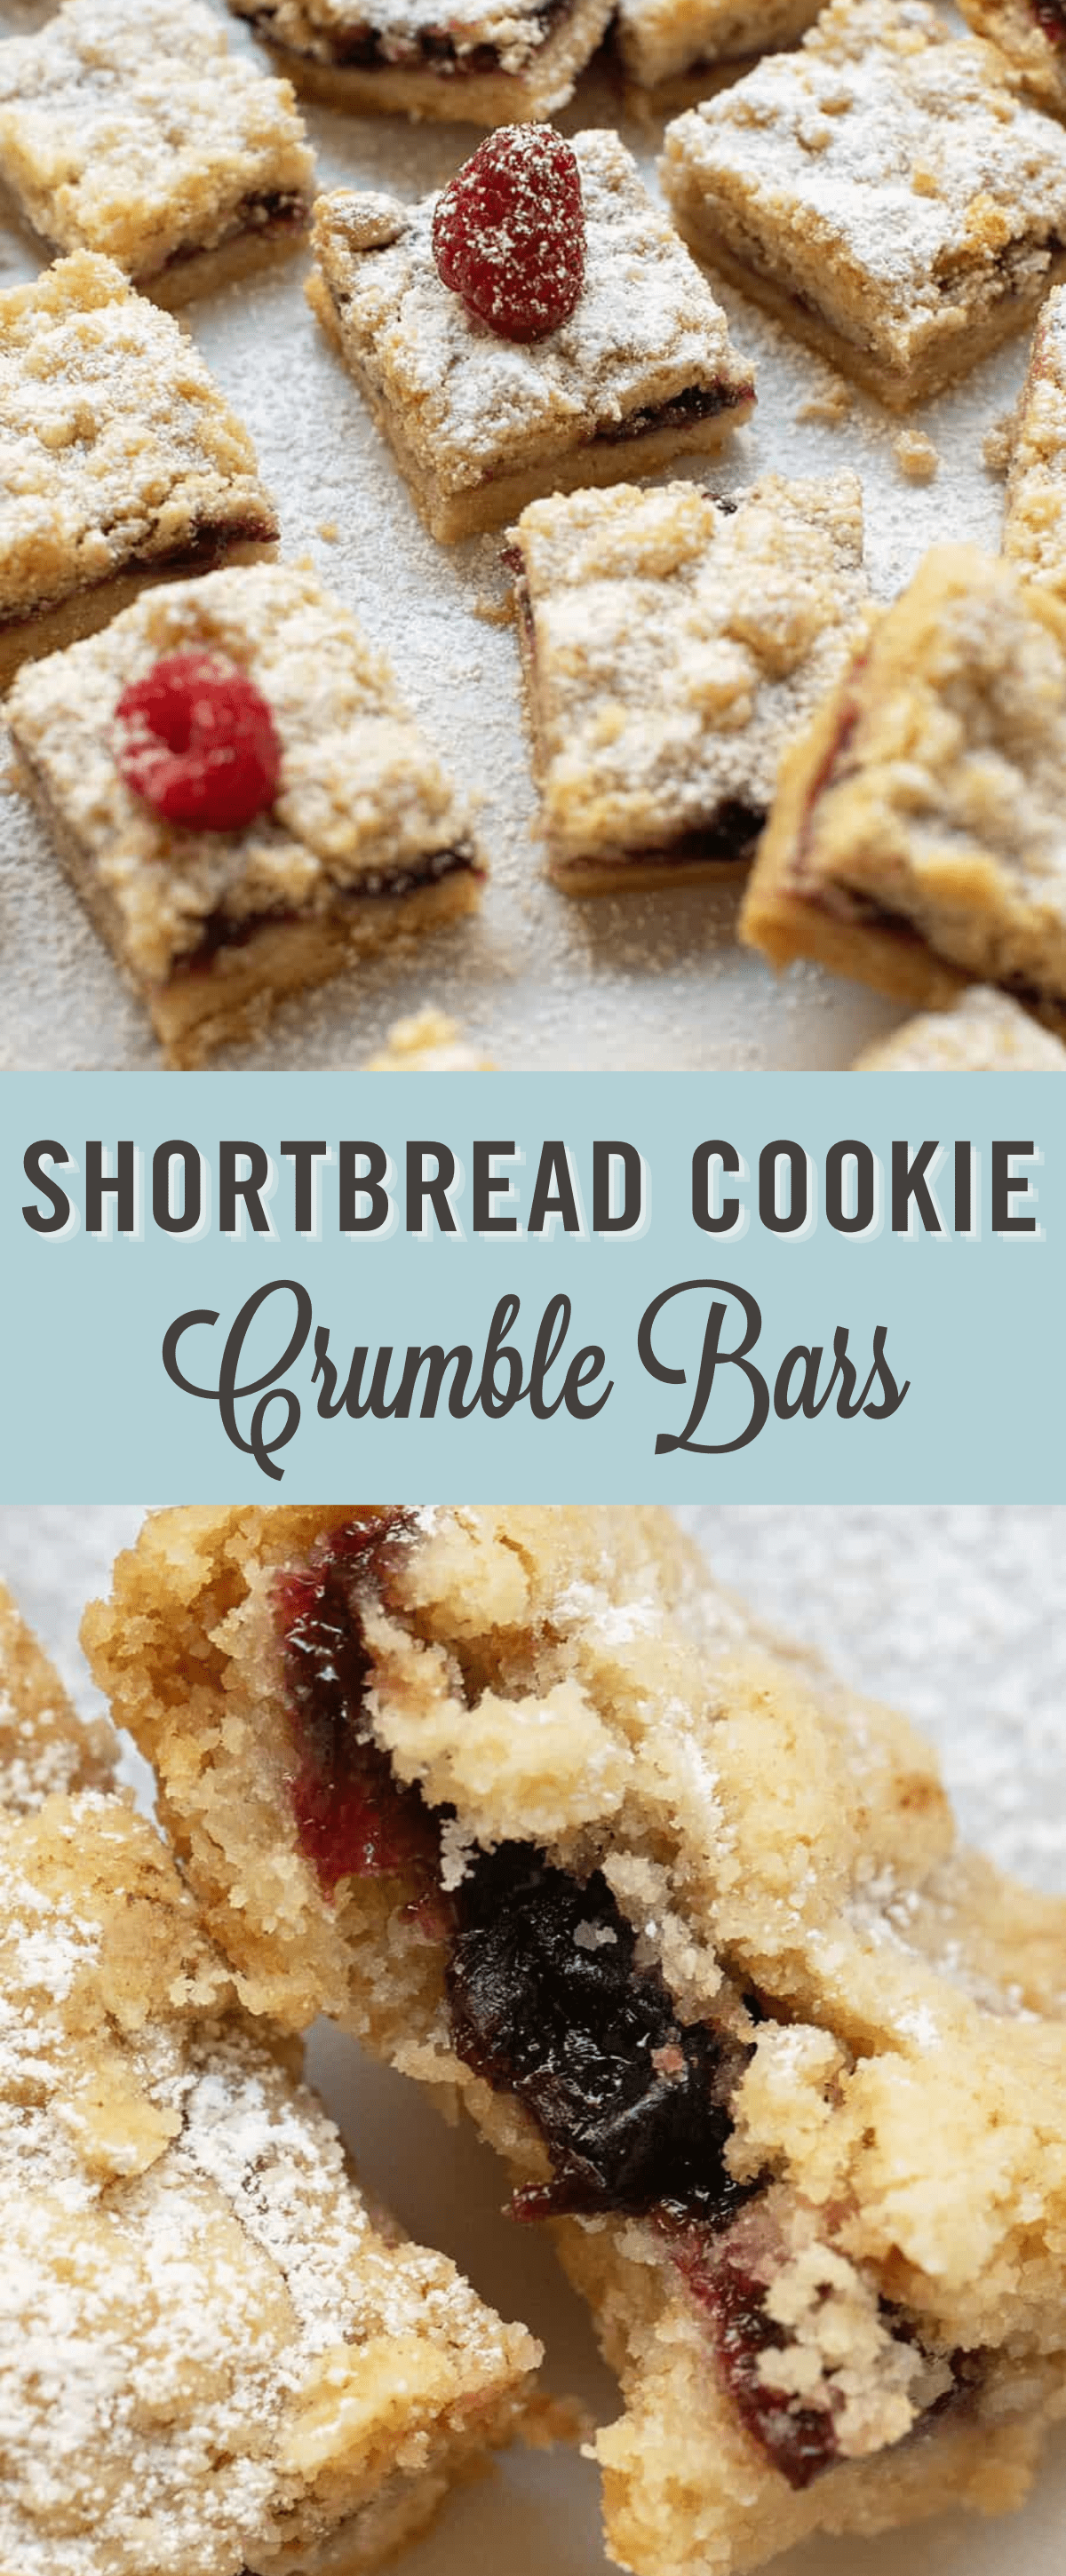 Shortbread Cookie Crumble Bars